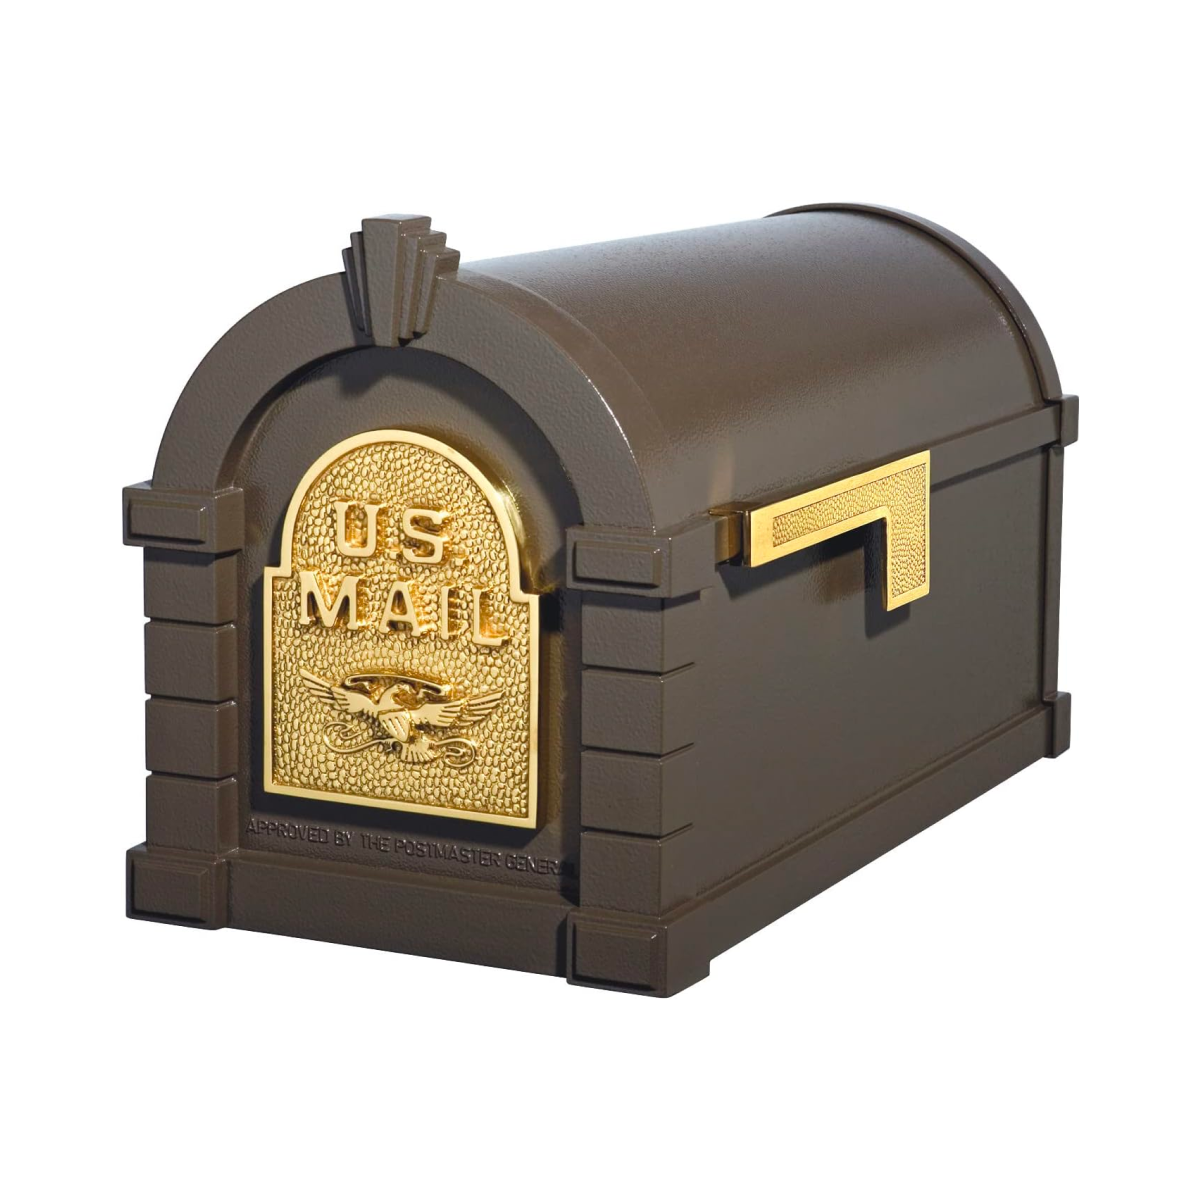 Keystone Mailbox Featured Image